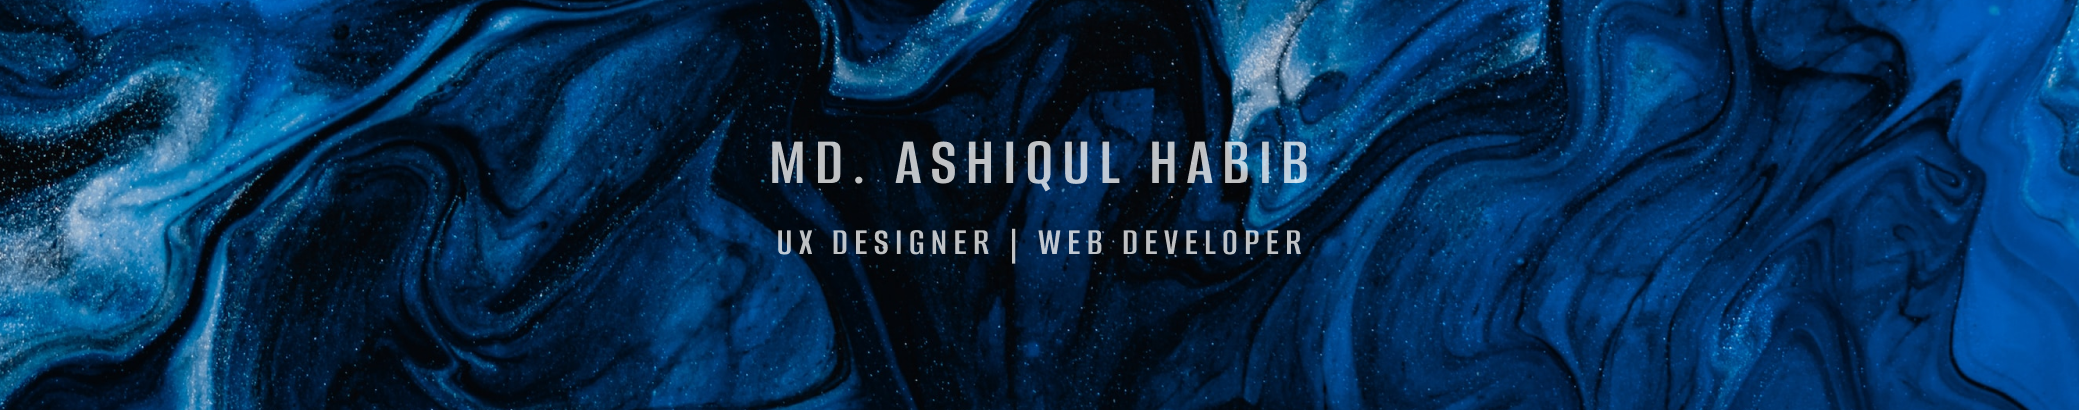 Bannière de profil de Md. Ashiqul Habib